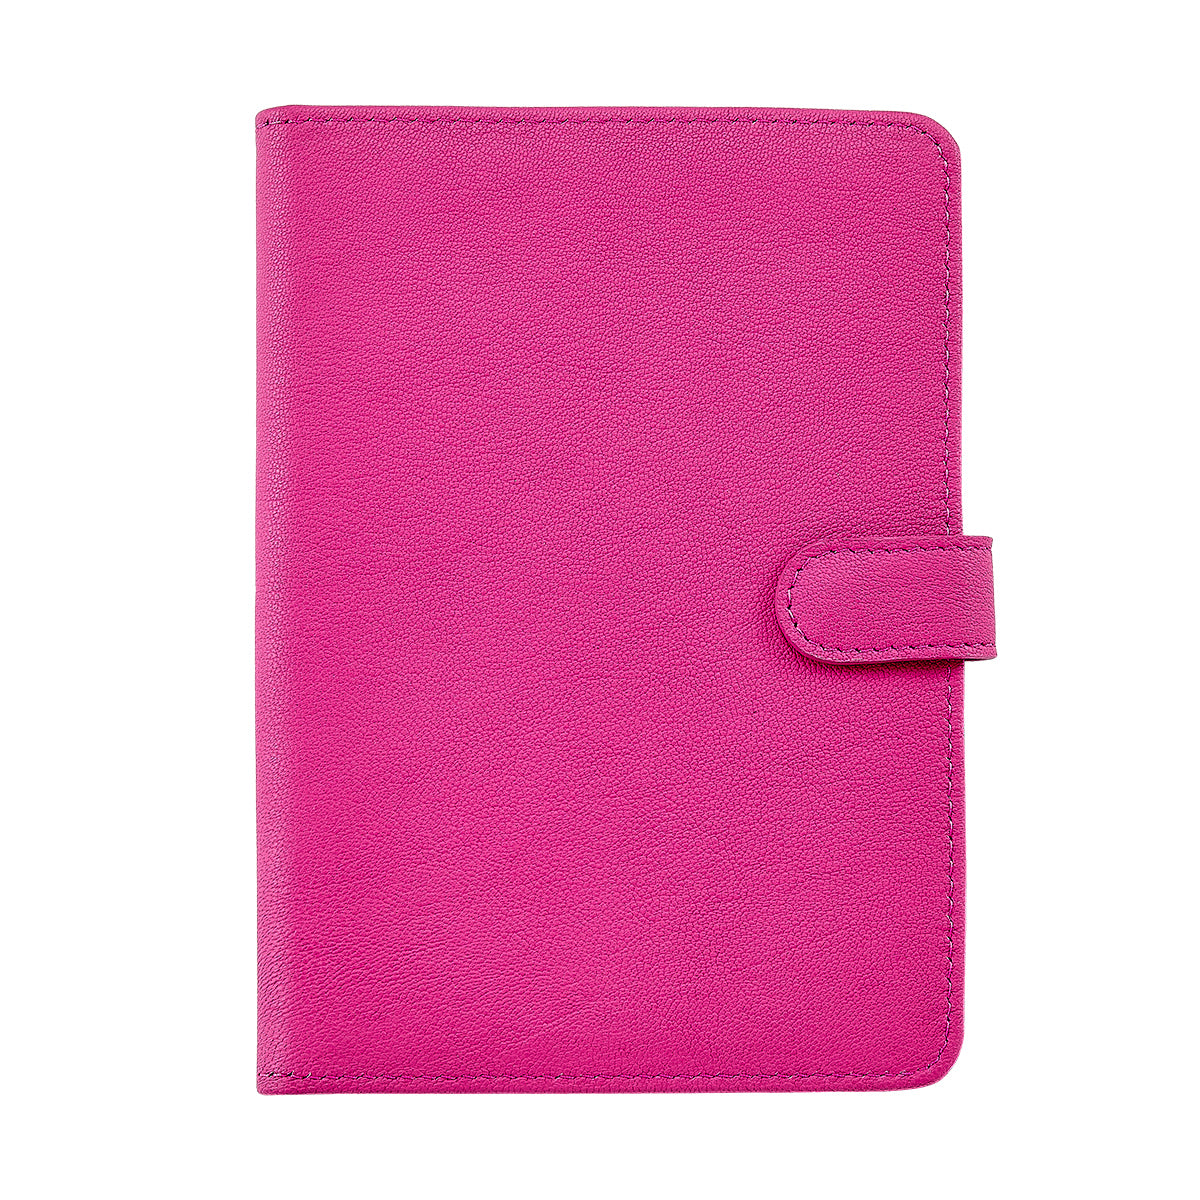 Graphic Image IPad Mini Case Pink Goatskin Leather